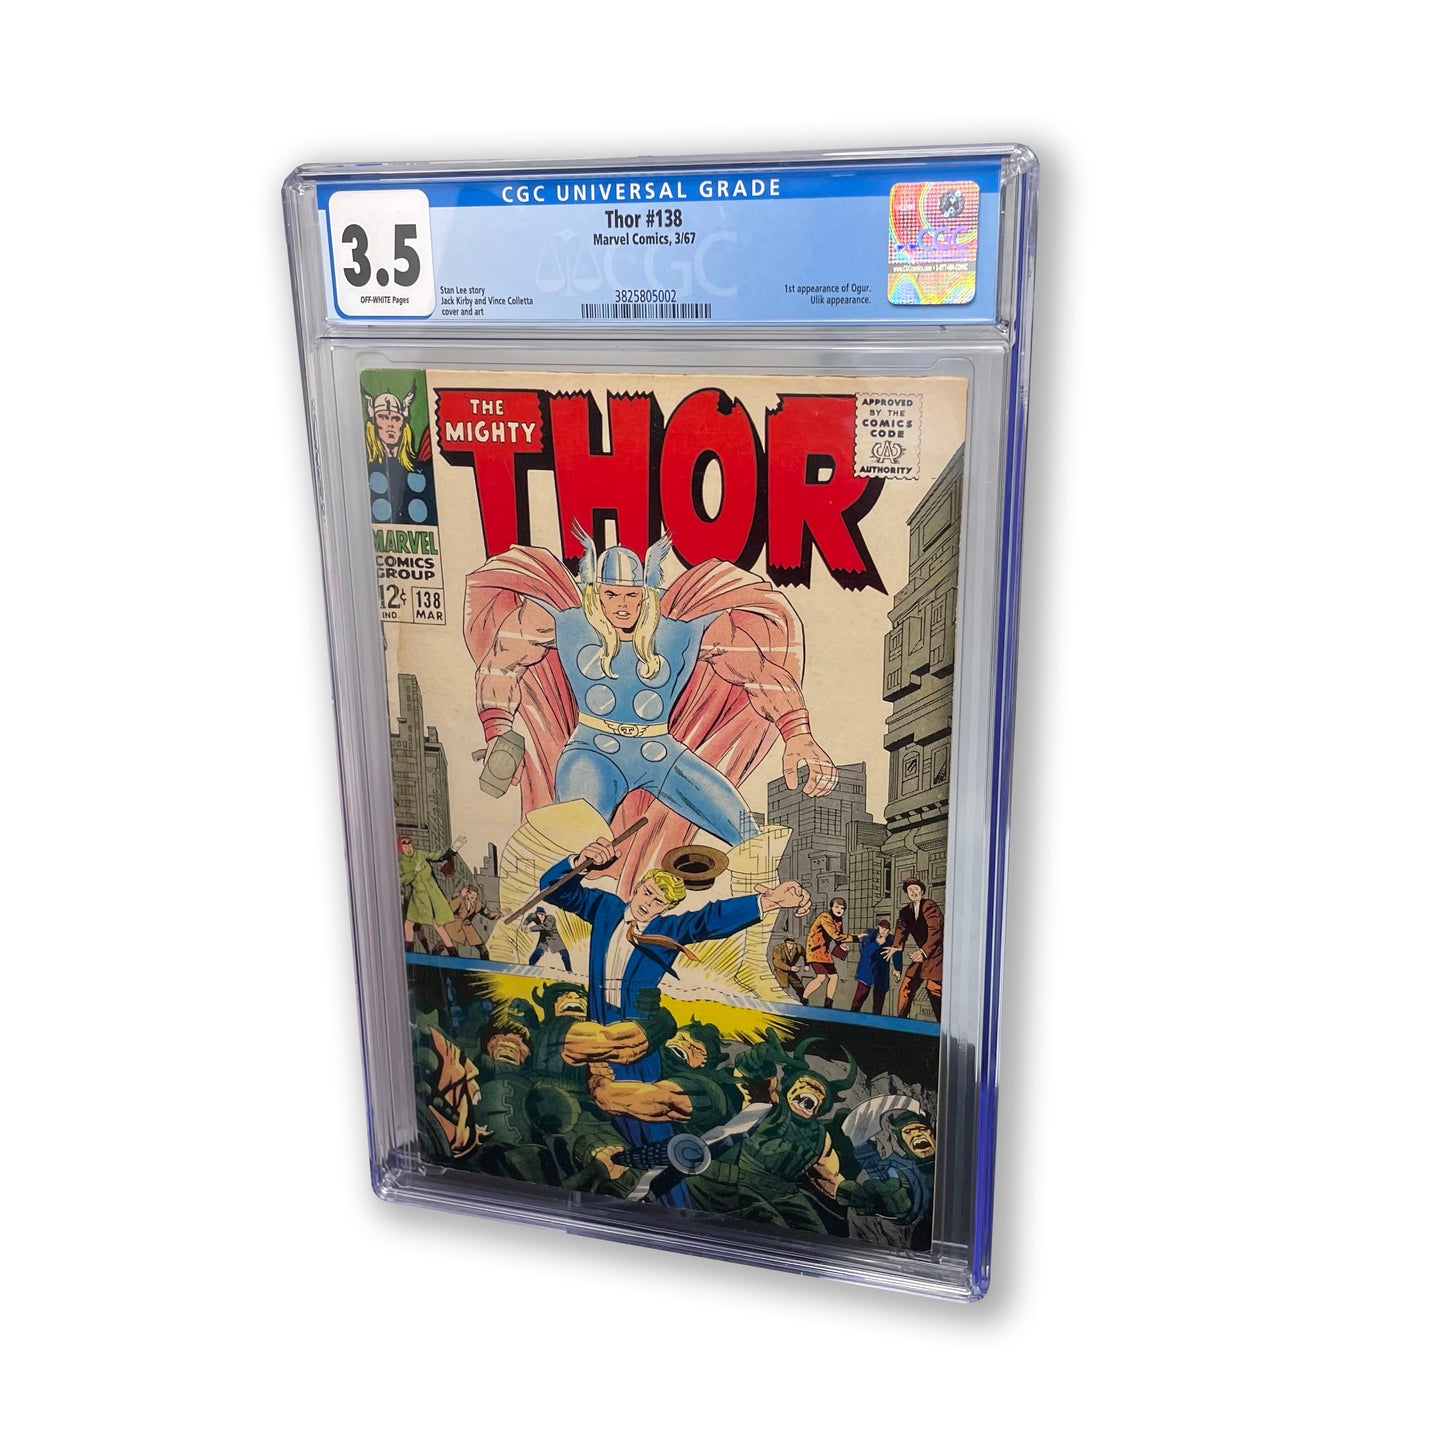 Thor #138